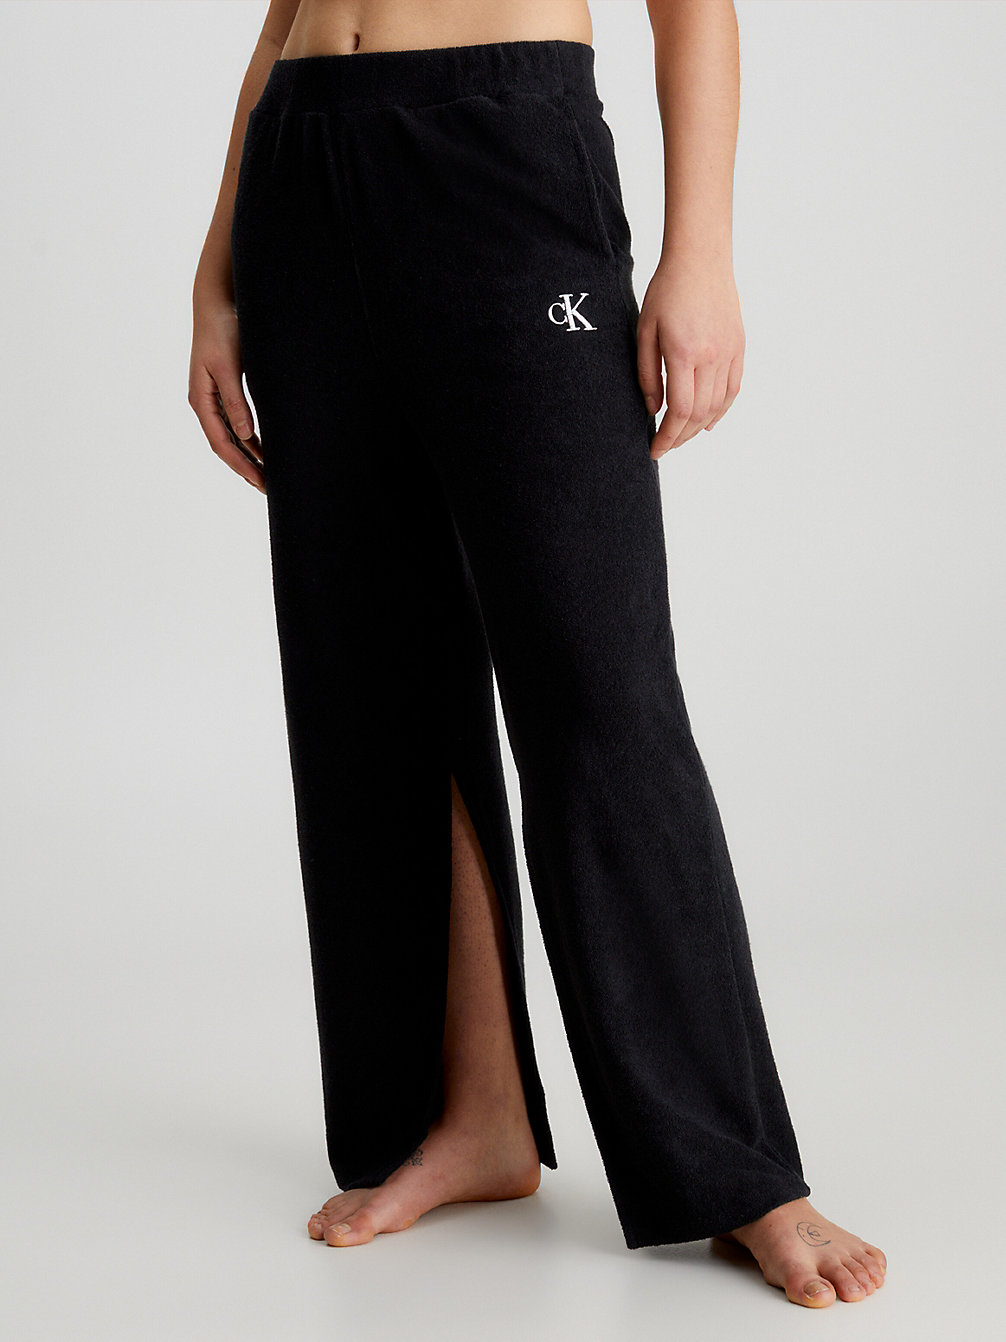 PVH BLACK Towelling Beach Pants - CK Monogram undefined women Calvin Klein